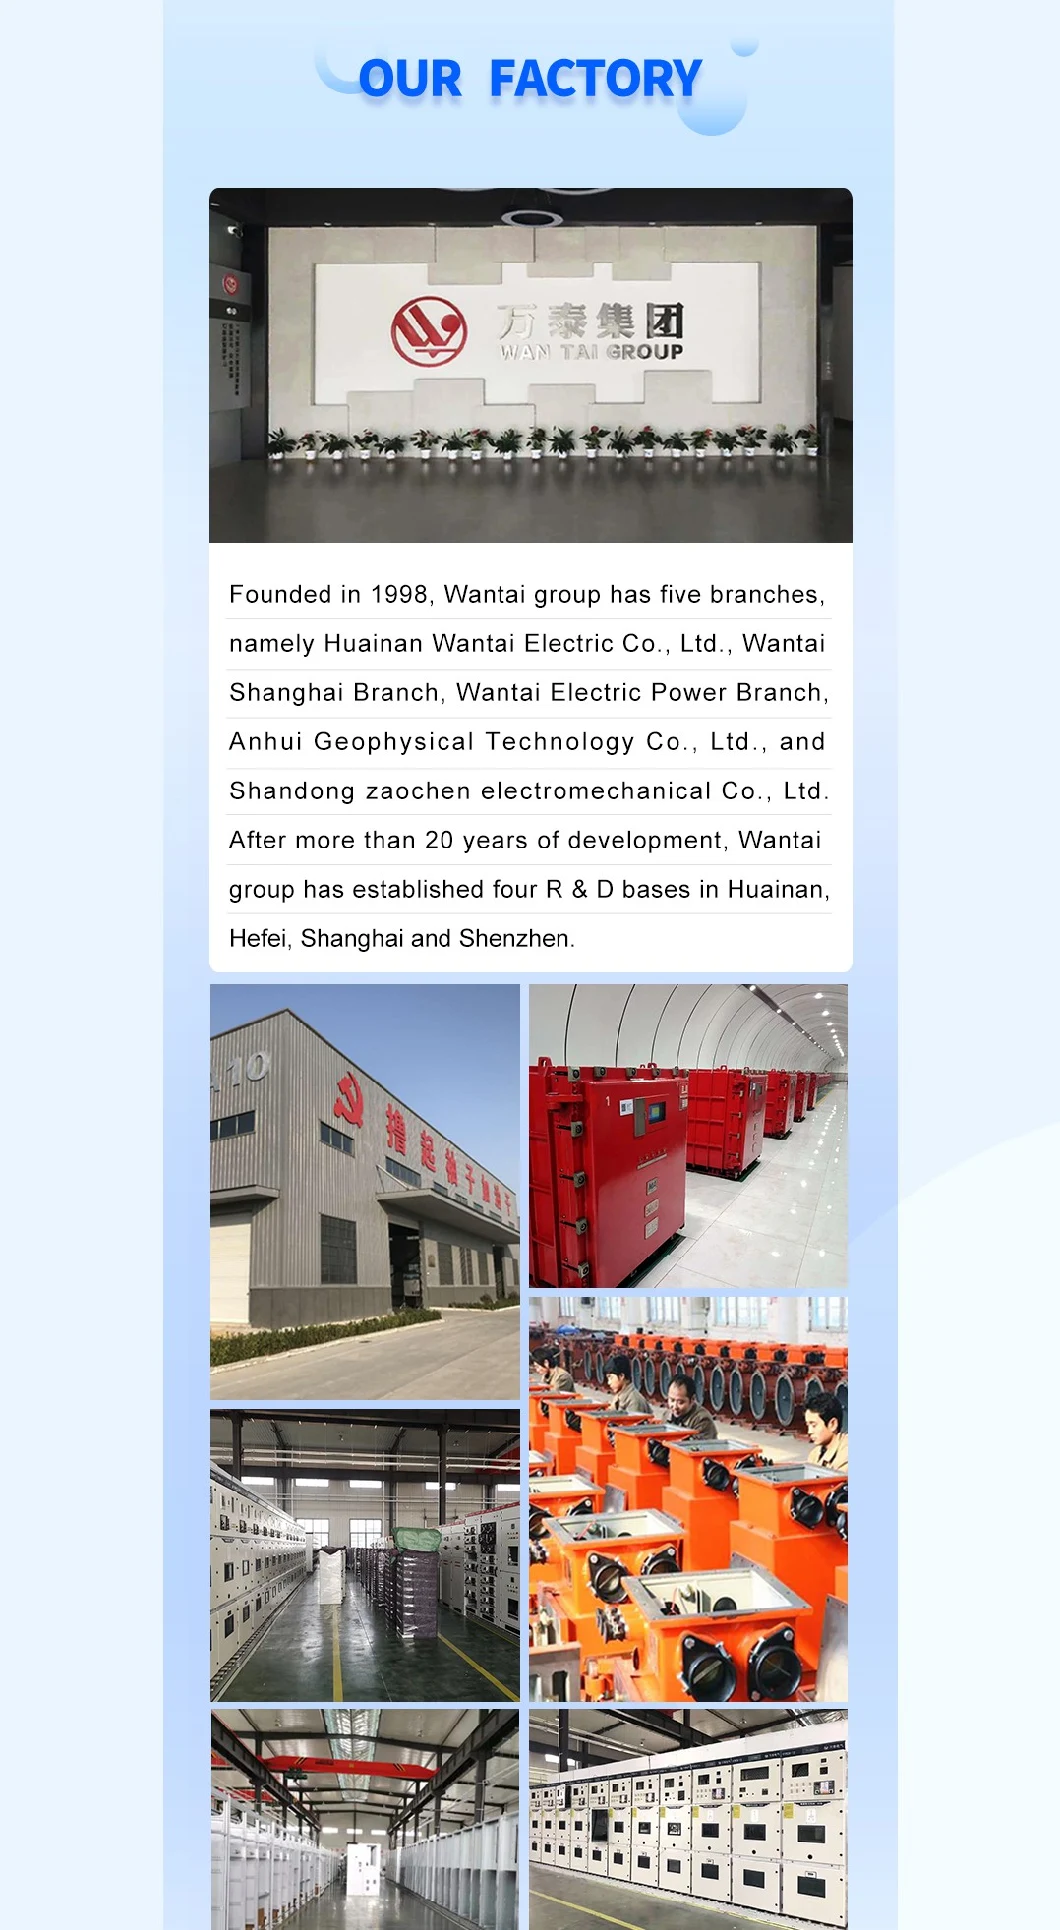 China Metal Power Distribution Switch Box - China Distribution Box, Distribution Cabinet